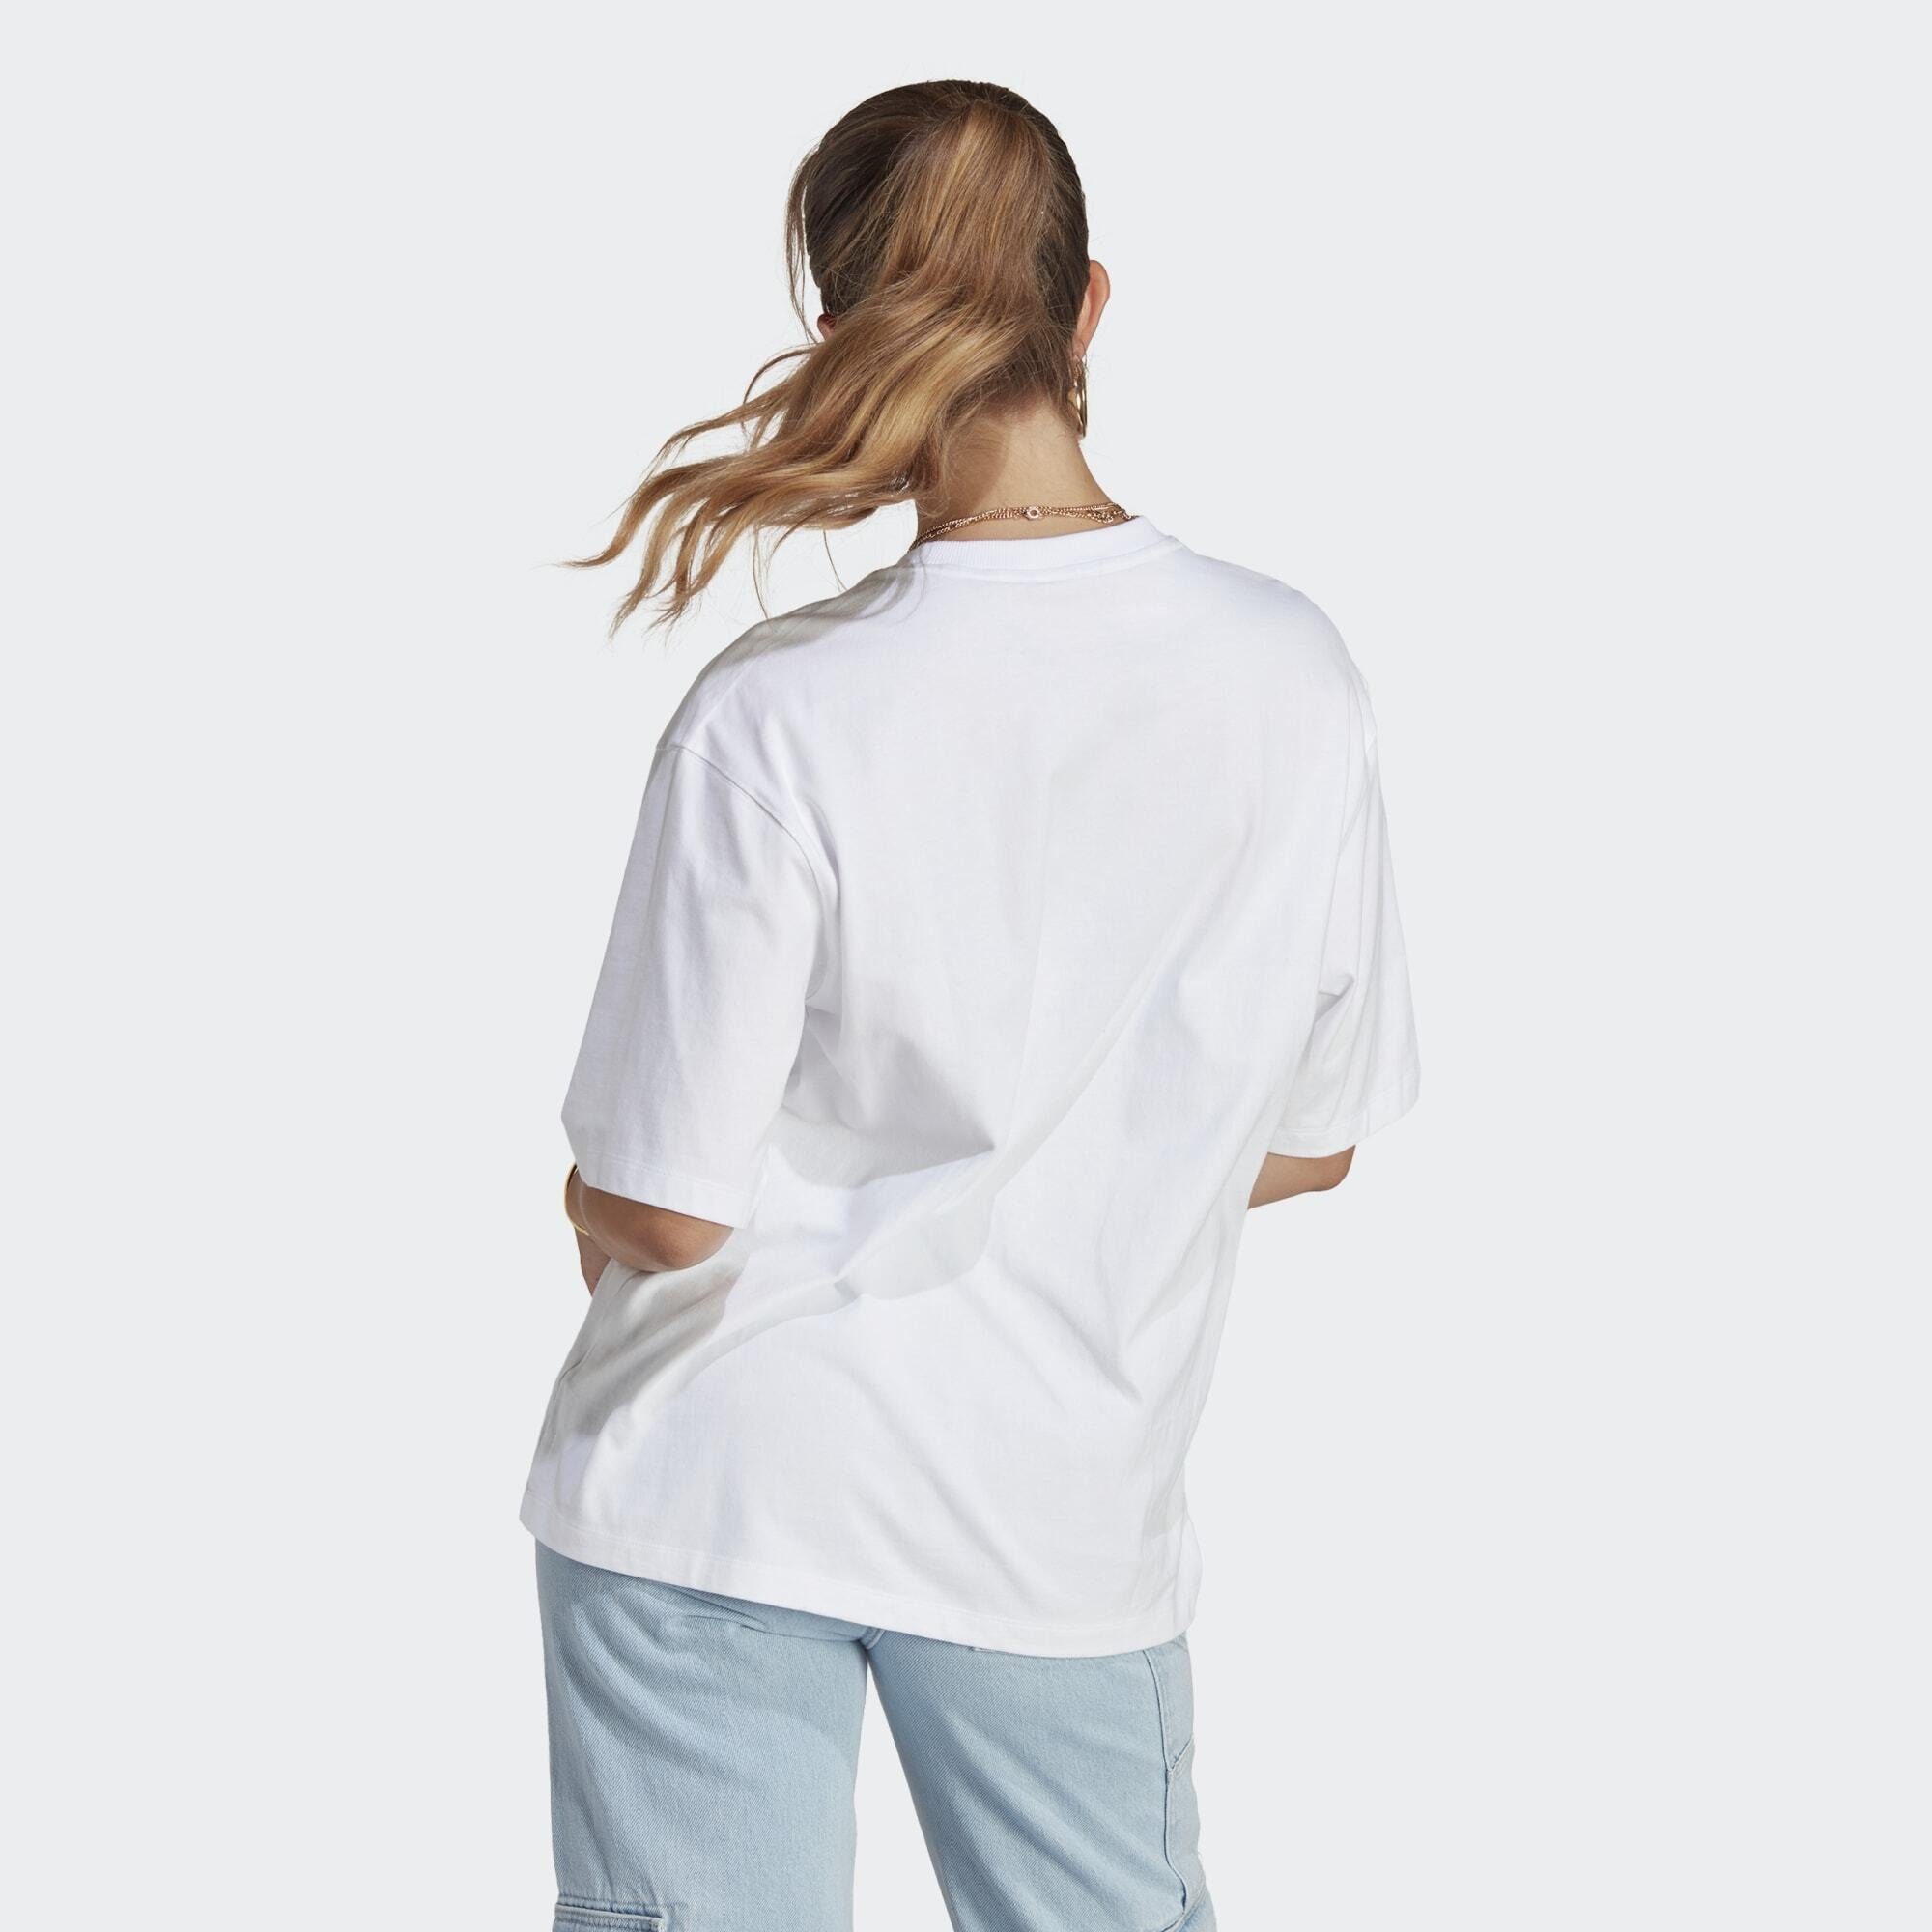 ESSENTIALS Originals T-Shirt White ADICOLOR adidas T-SHIRT